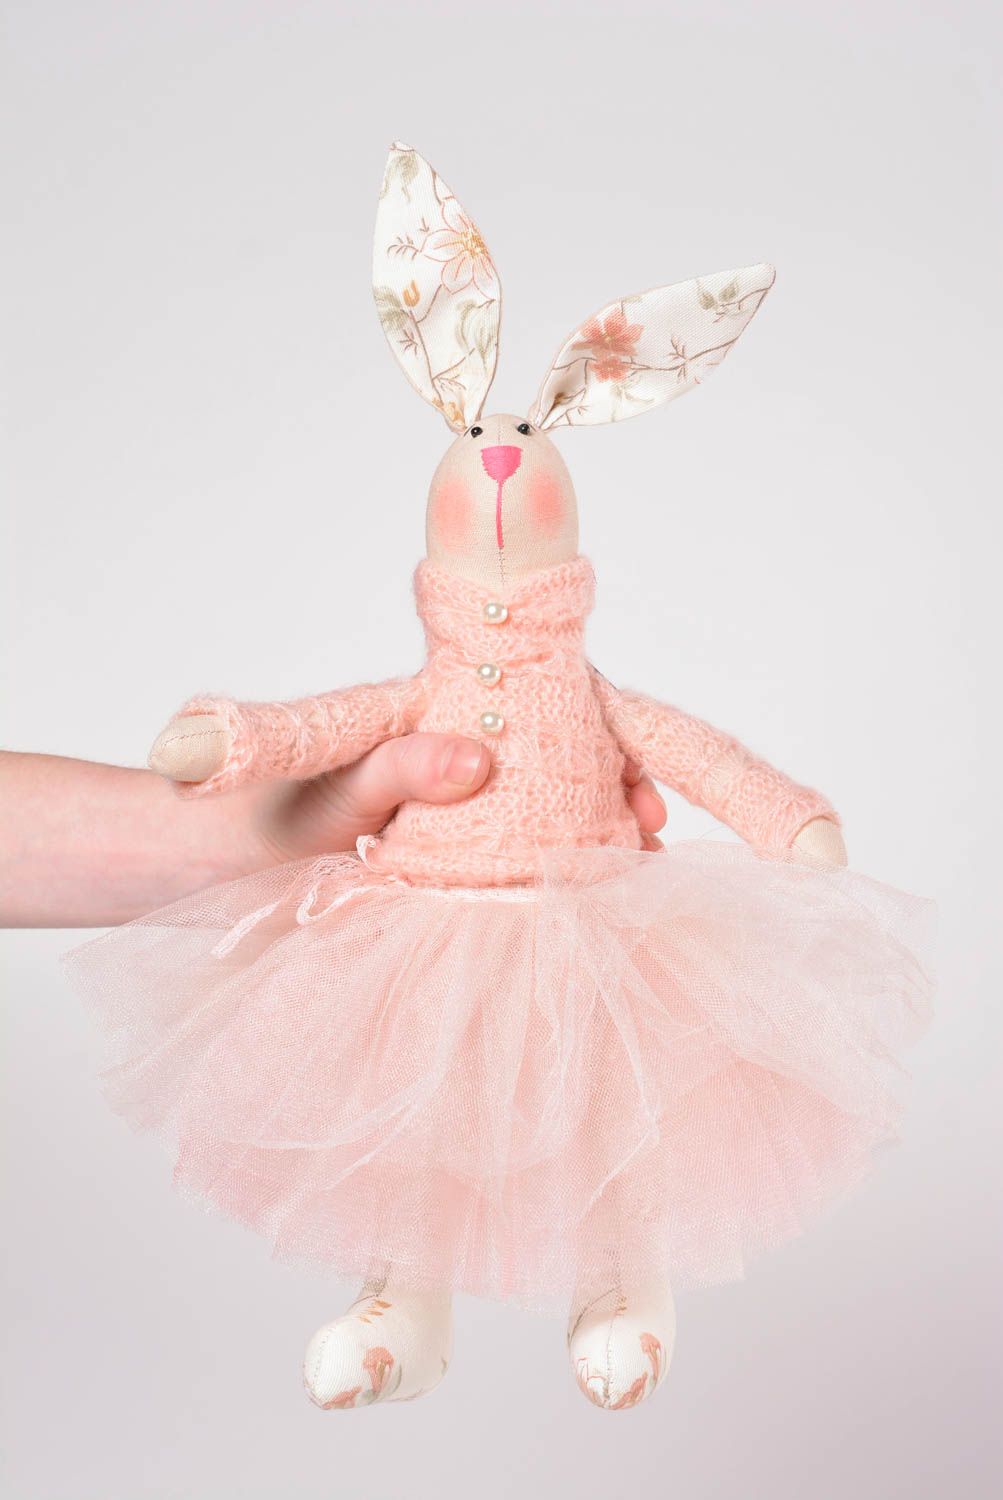 Handcrafted toy designer playroom interior decor toy hare stylish gift idea photo 2